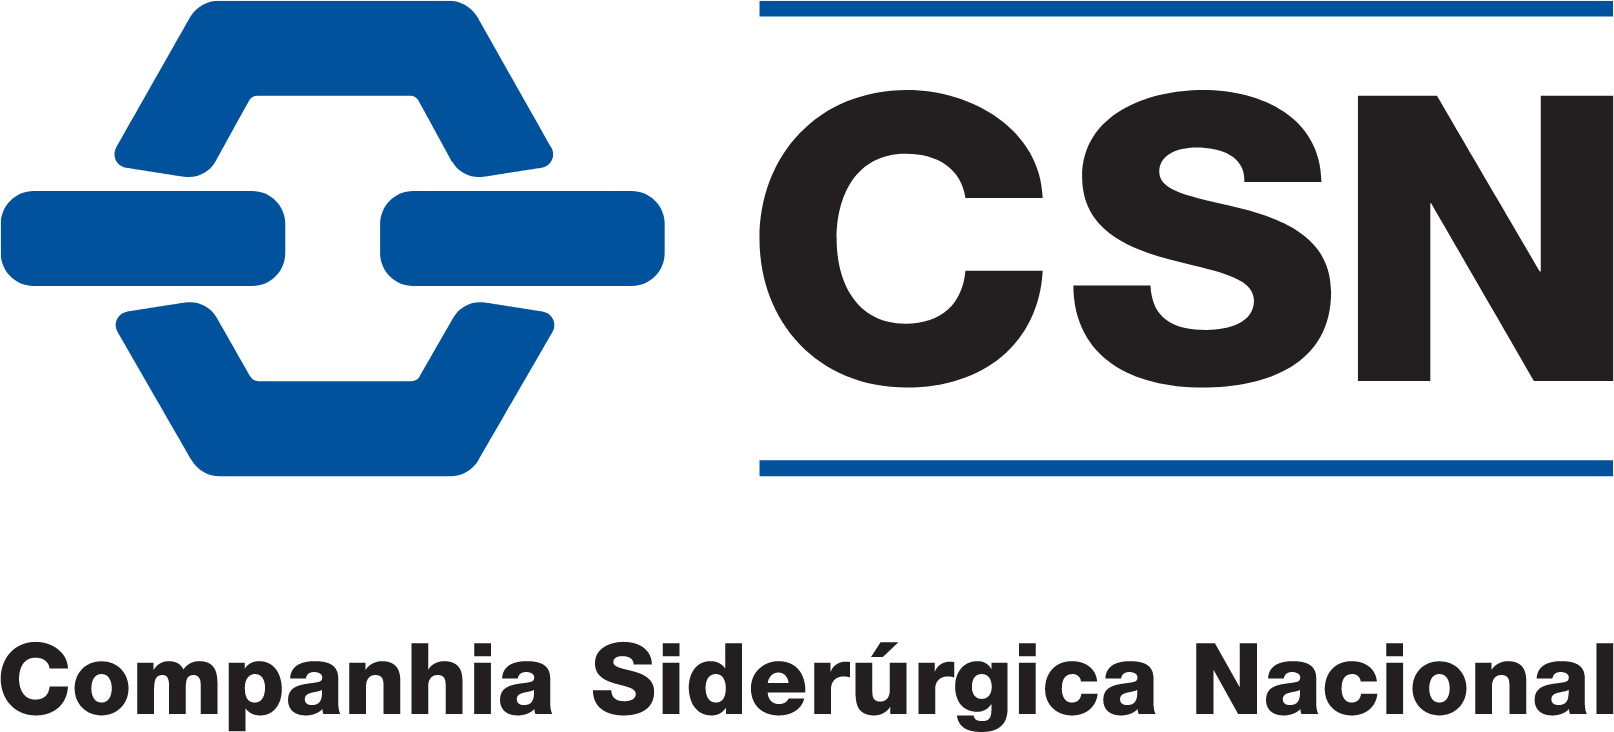 CSN Mineração logo large (transparent PNG)